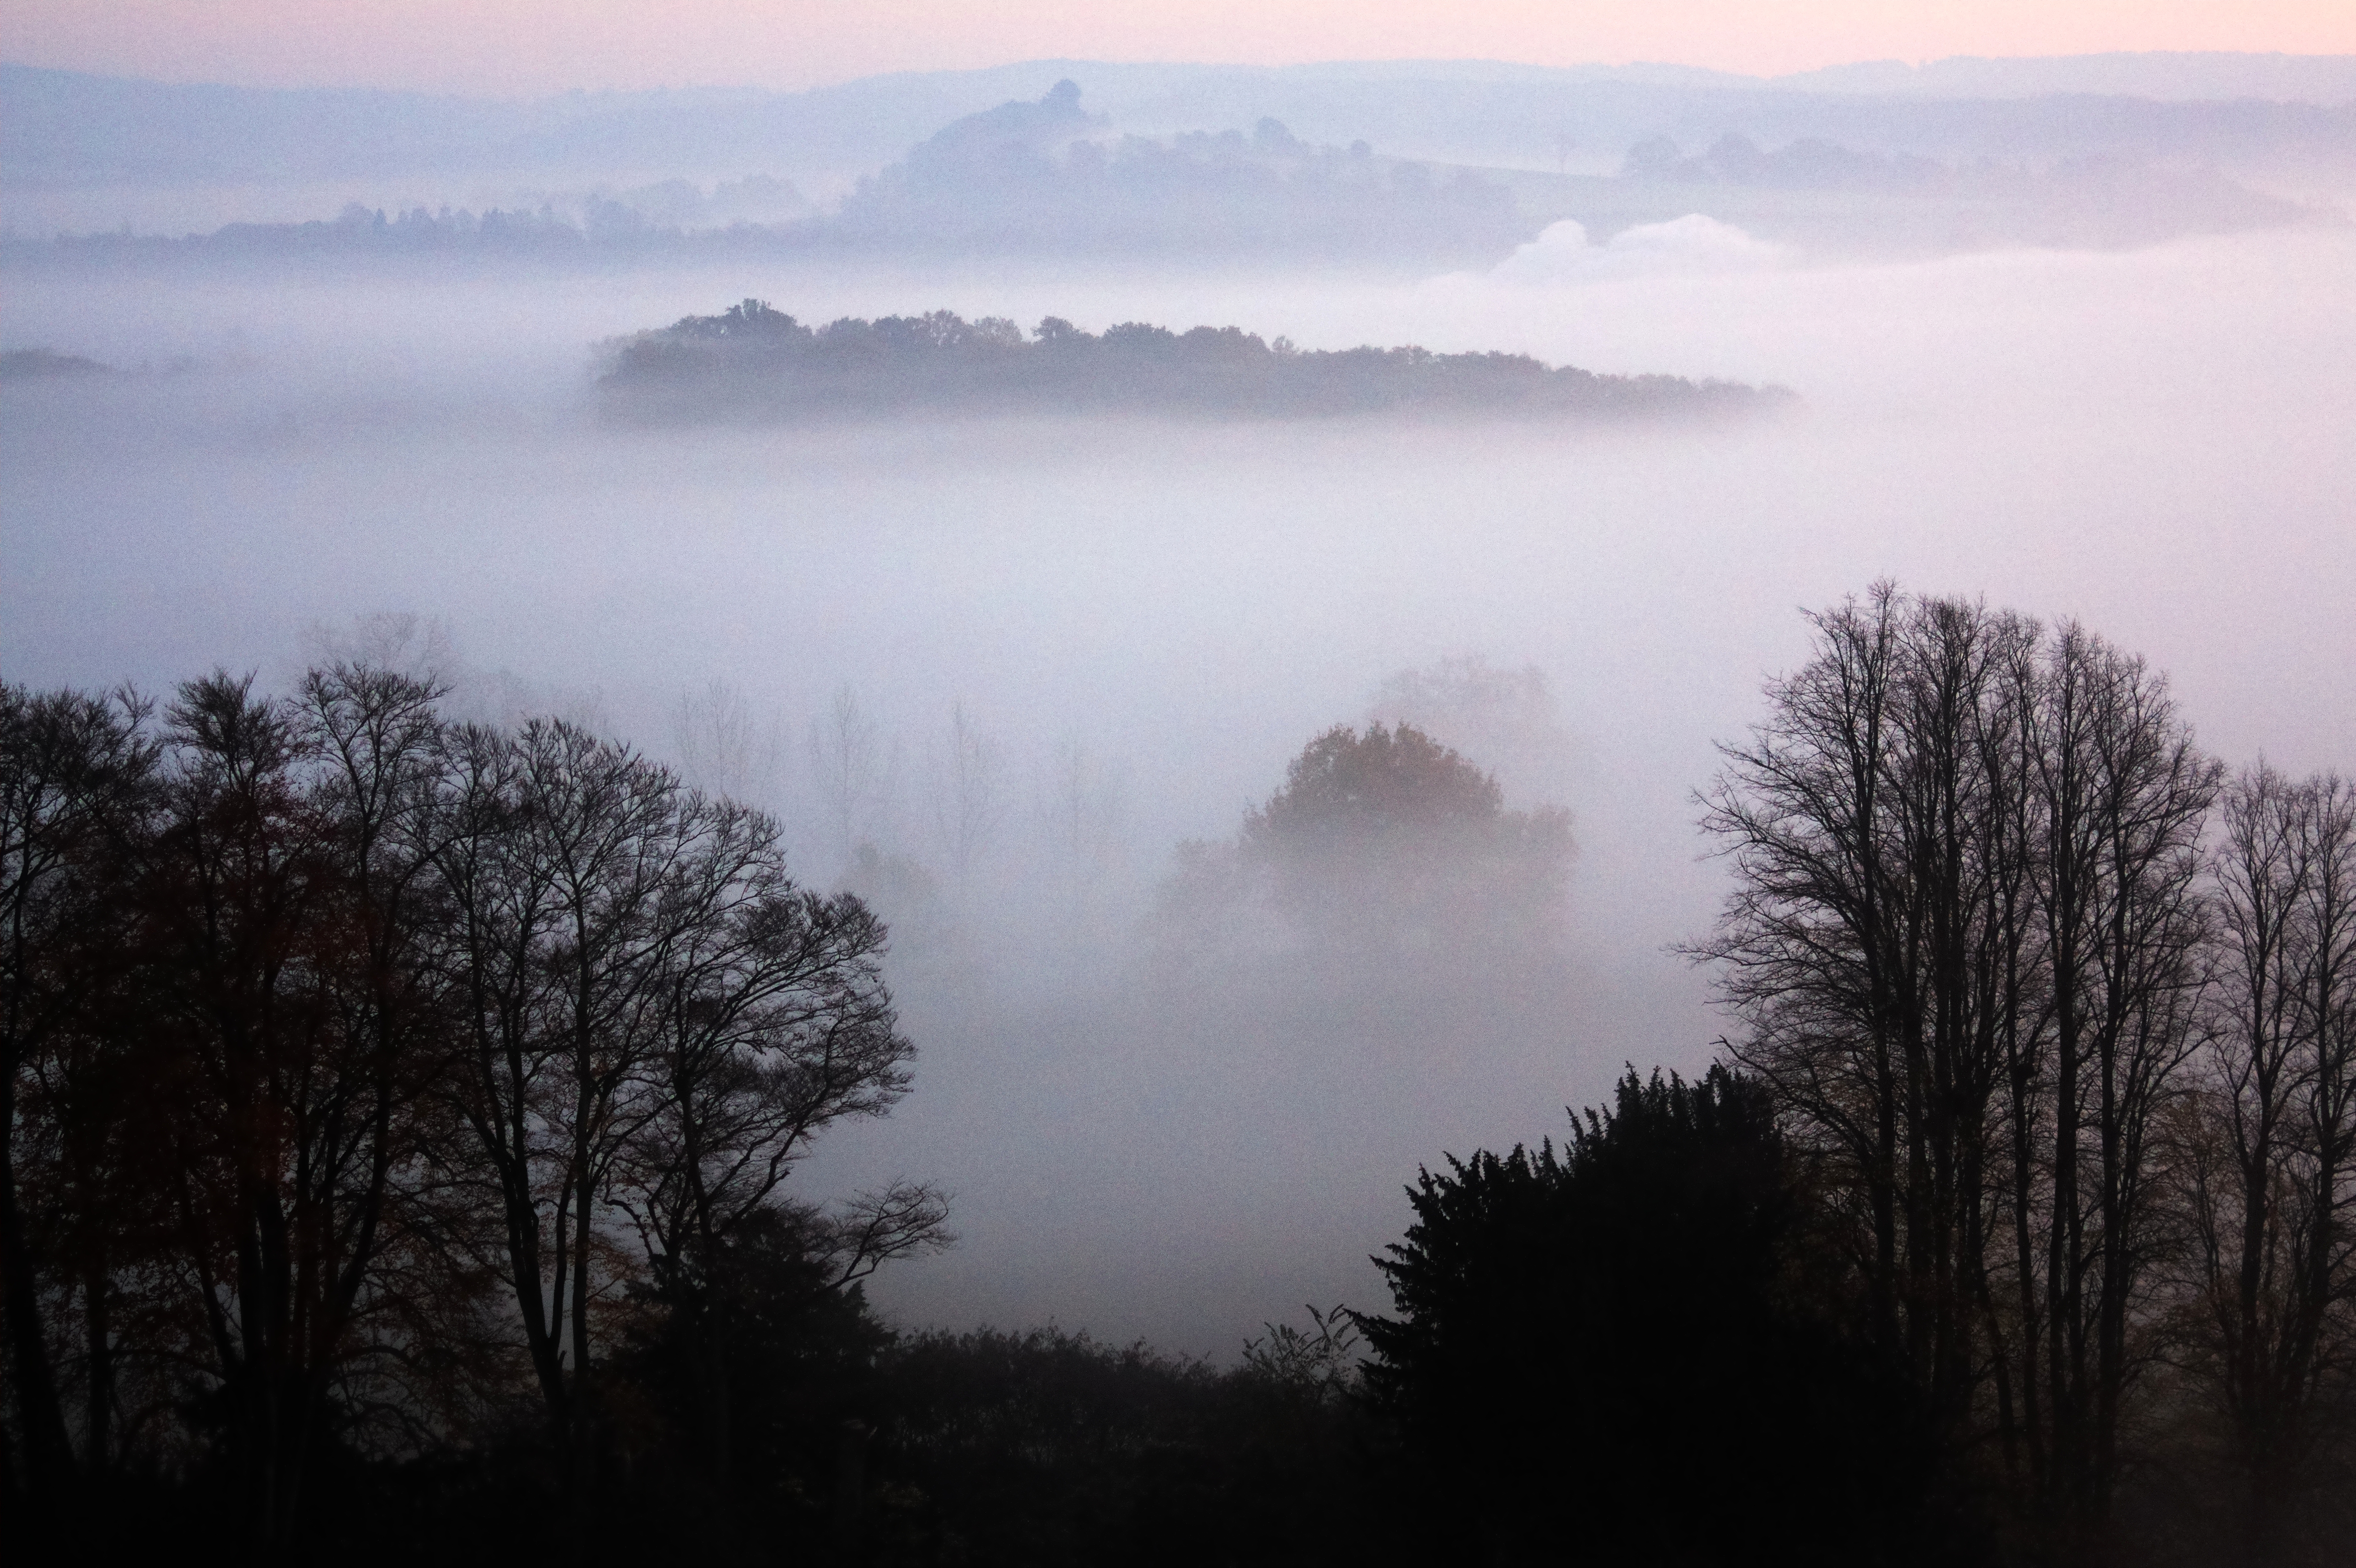 File:Flickr - don macauley - Misty Landscape.jpg - Wikimedia Commons